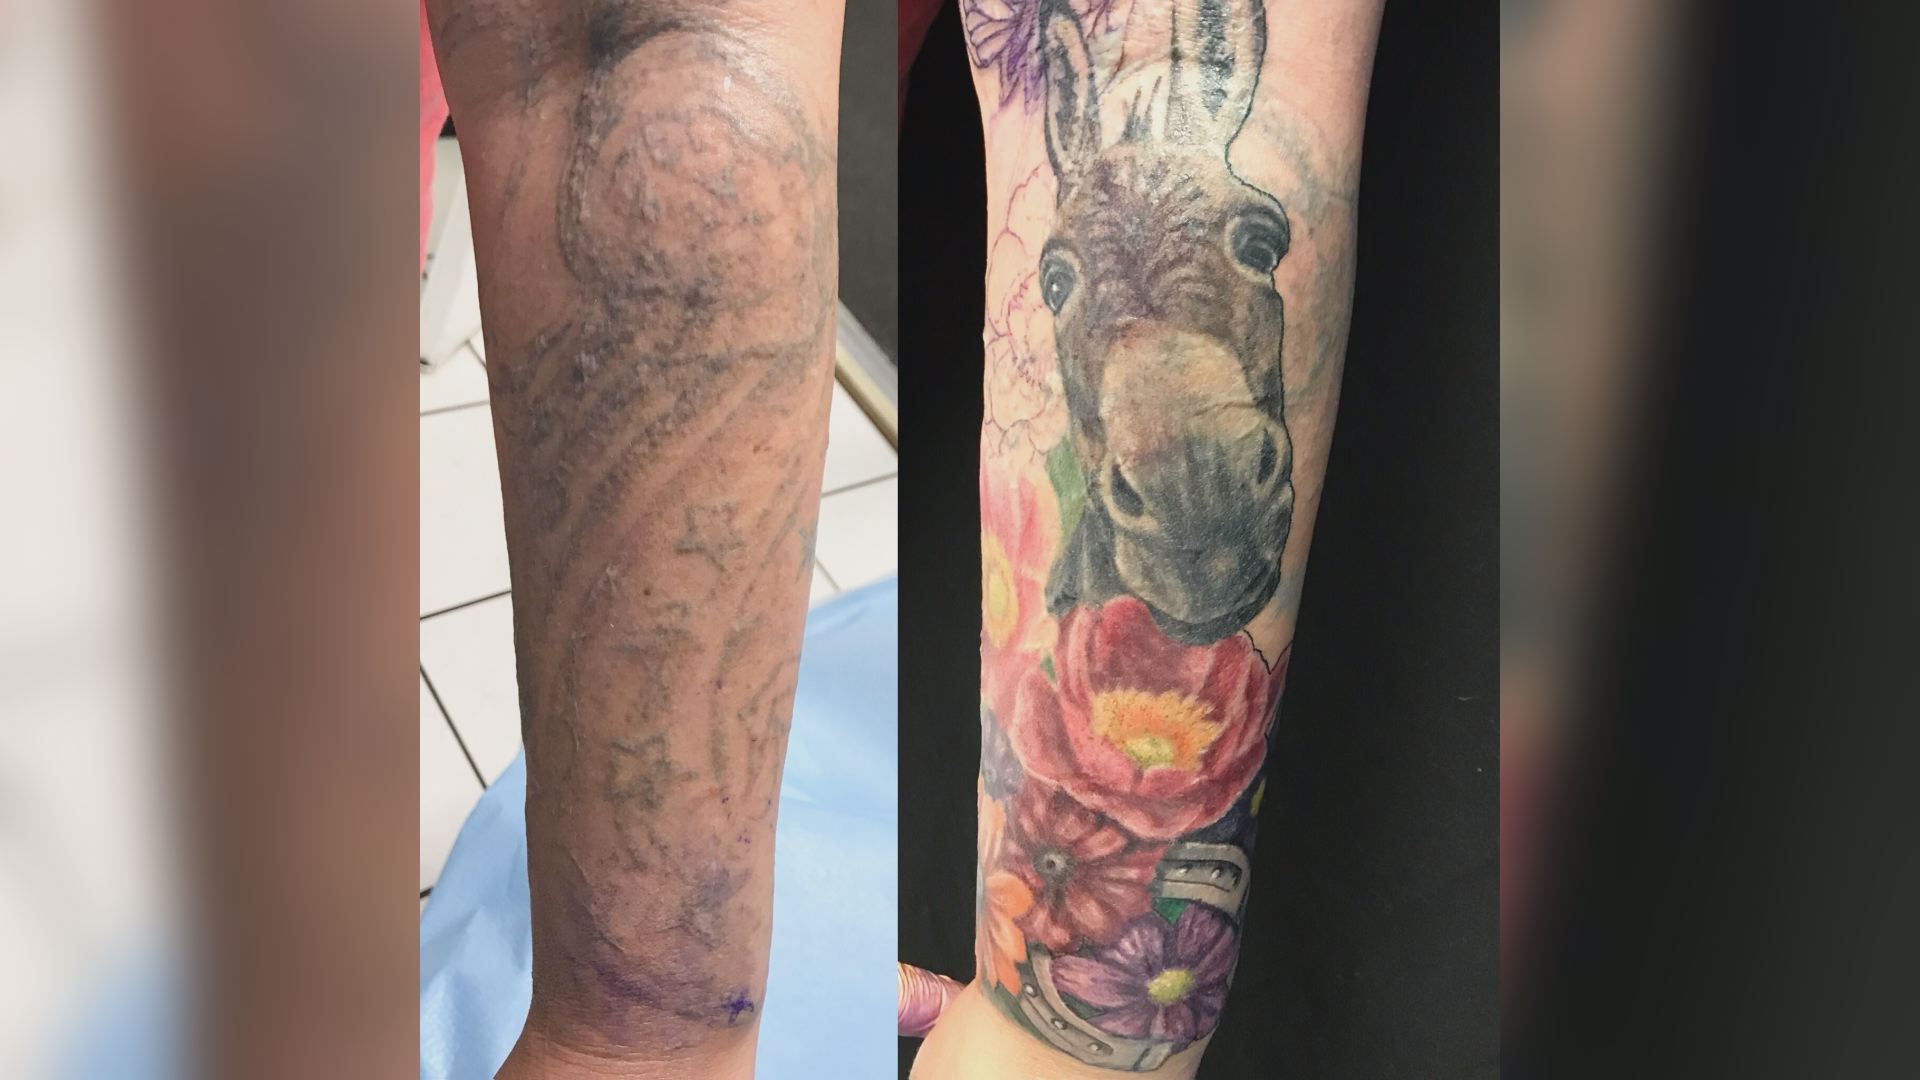 Self scars over tattoo harm Tattoo artist